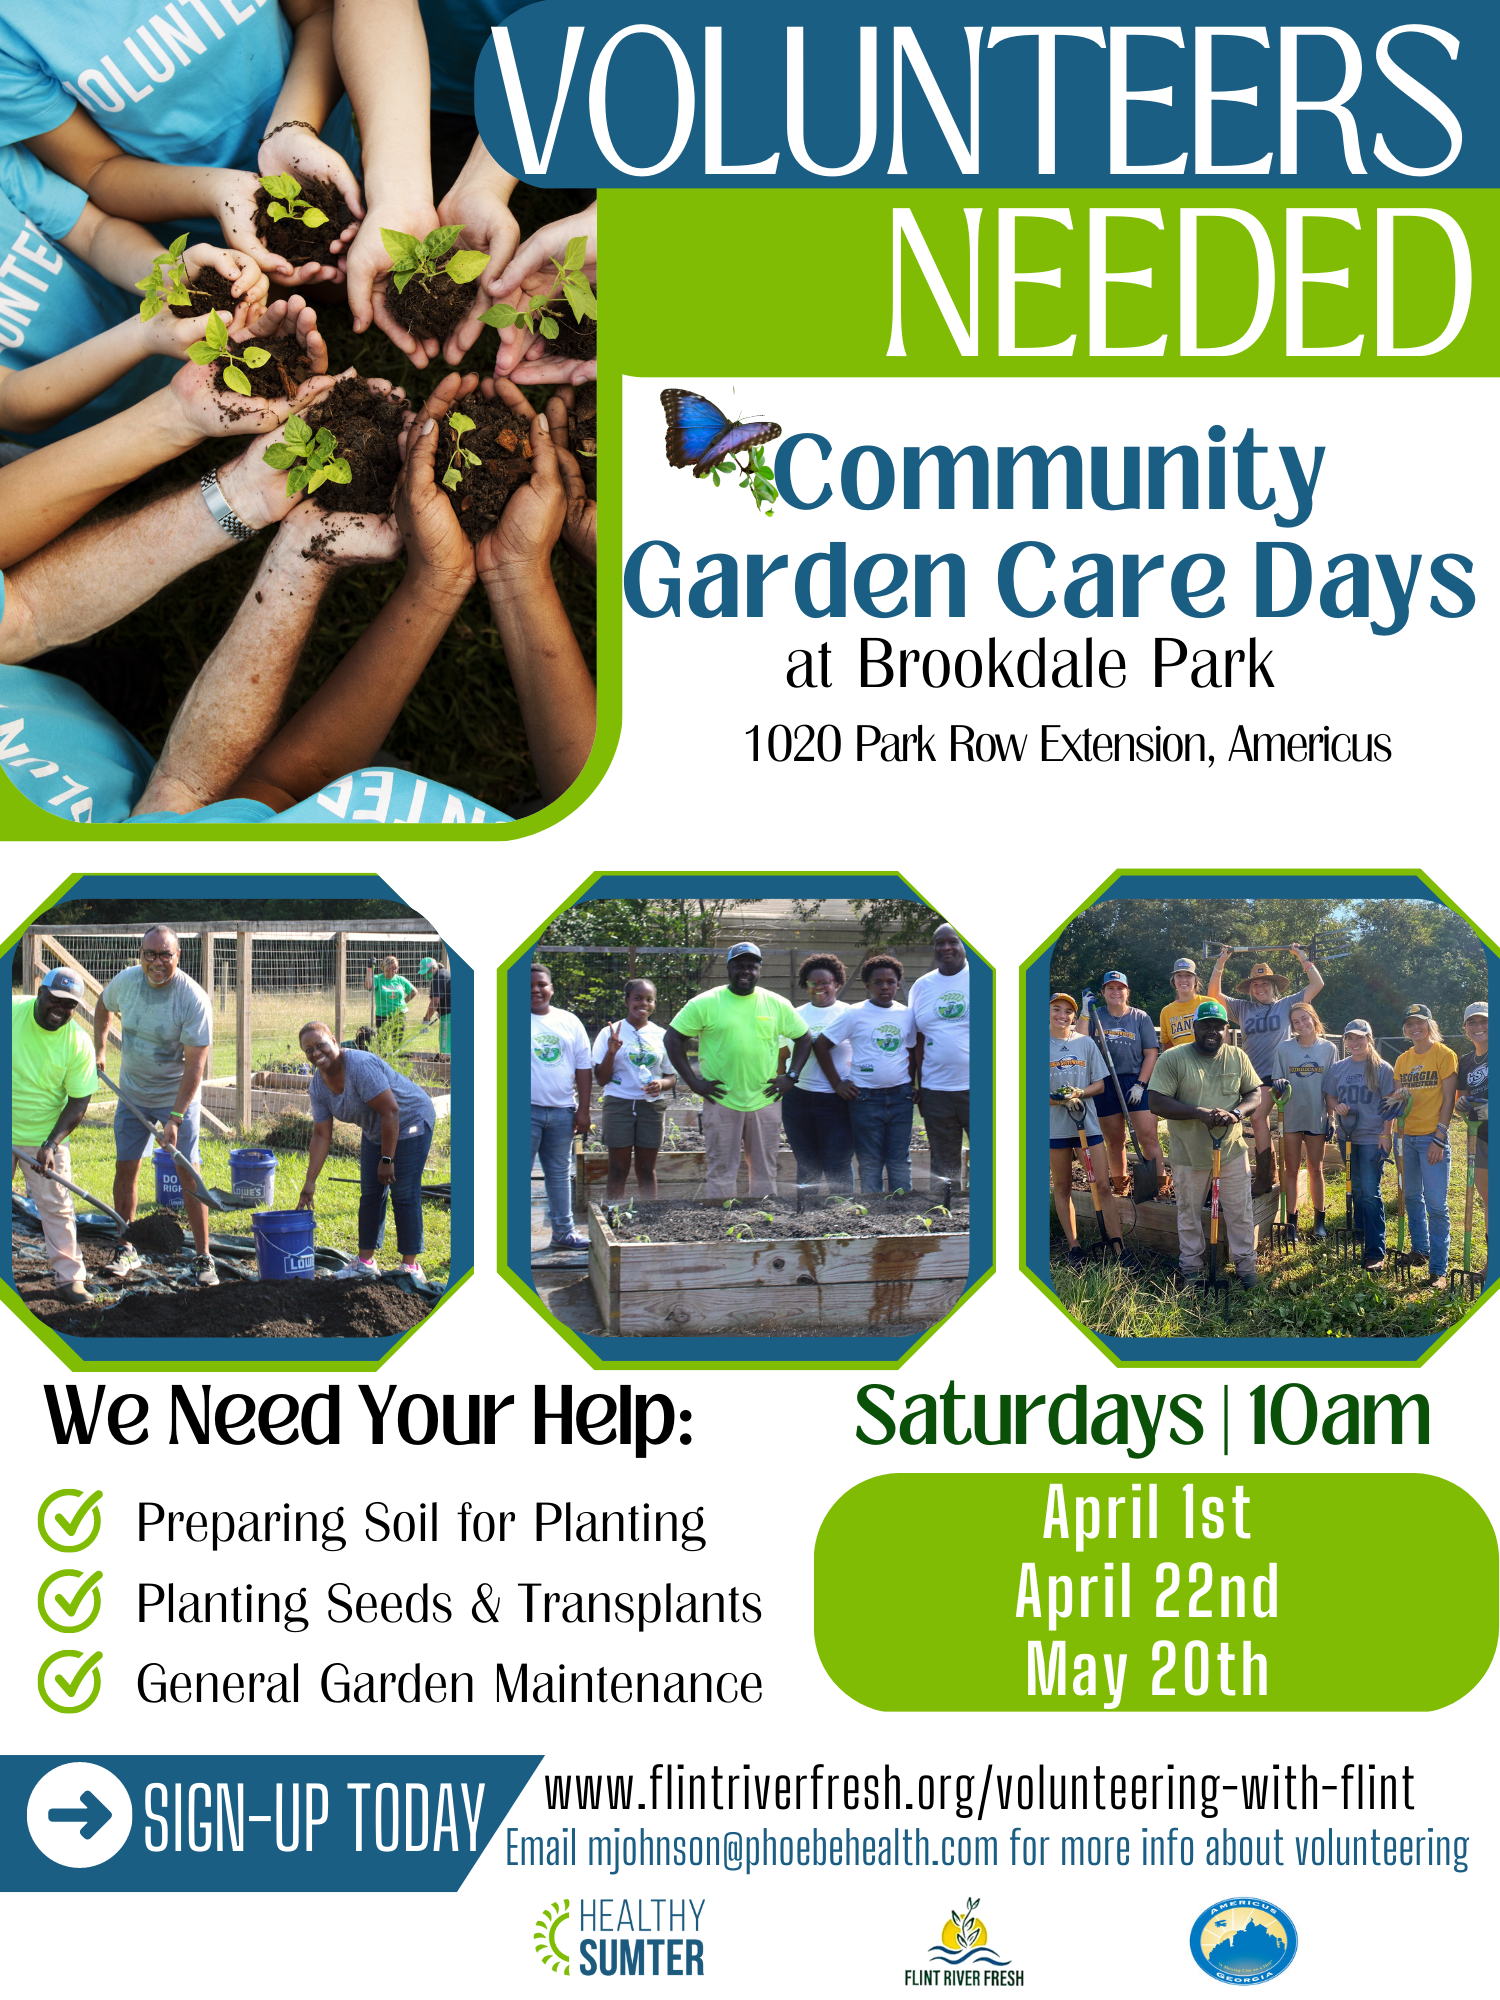 Copy of Healthy Sumter Garden Care Days Volunteer Poster (9 × 12 in) (1).png